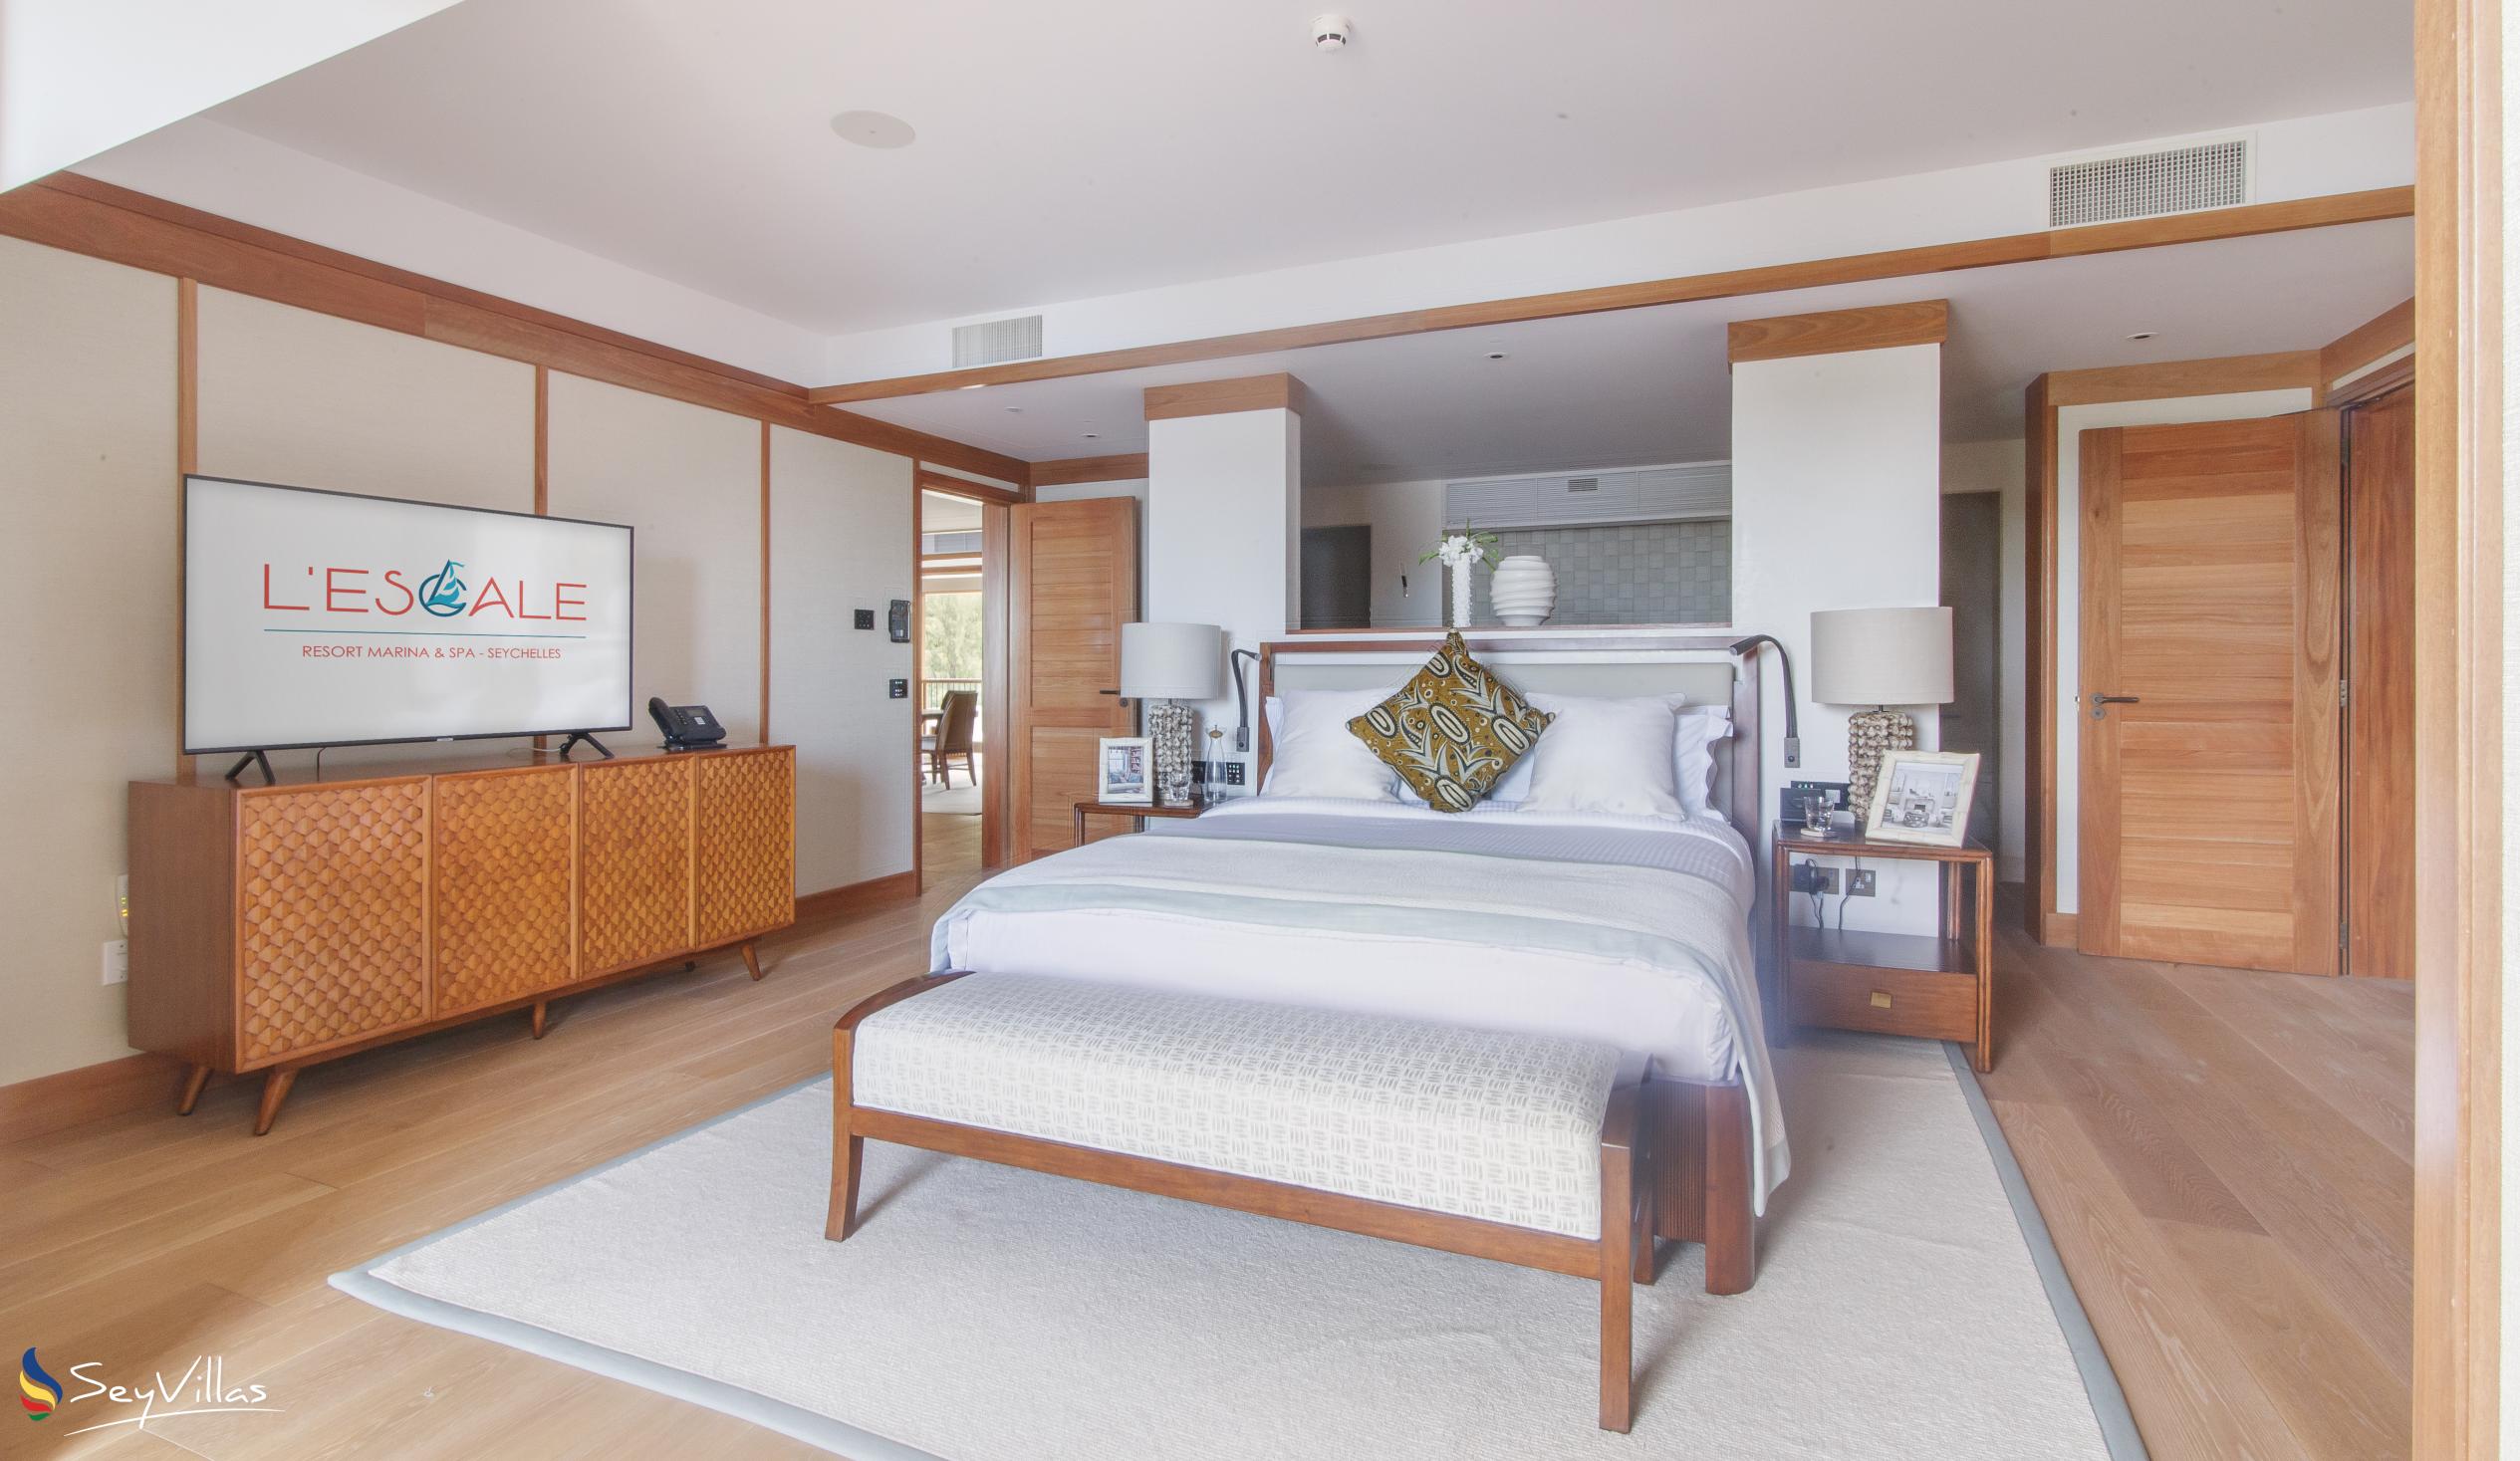 Photo 81: L'Escale Resort, Marina & Spa - Two Bedroom Luxury Penthouse - Mahé (Seychelles)